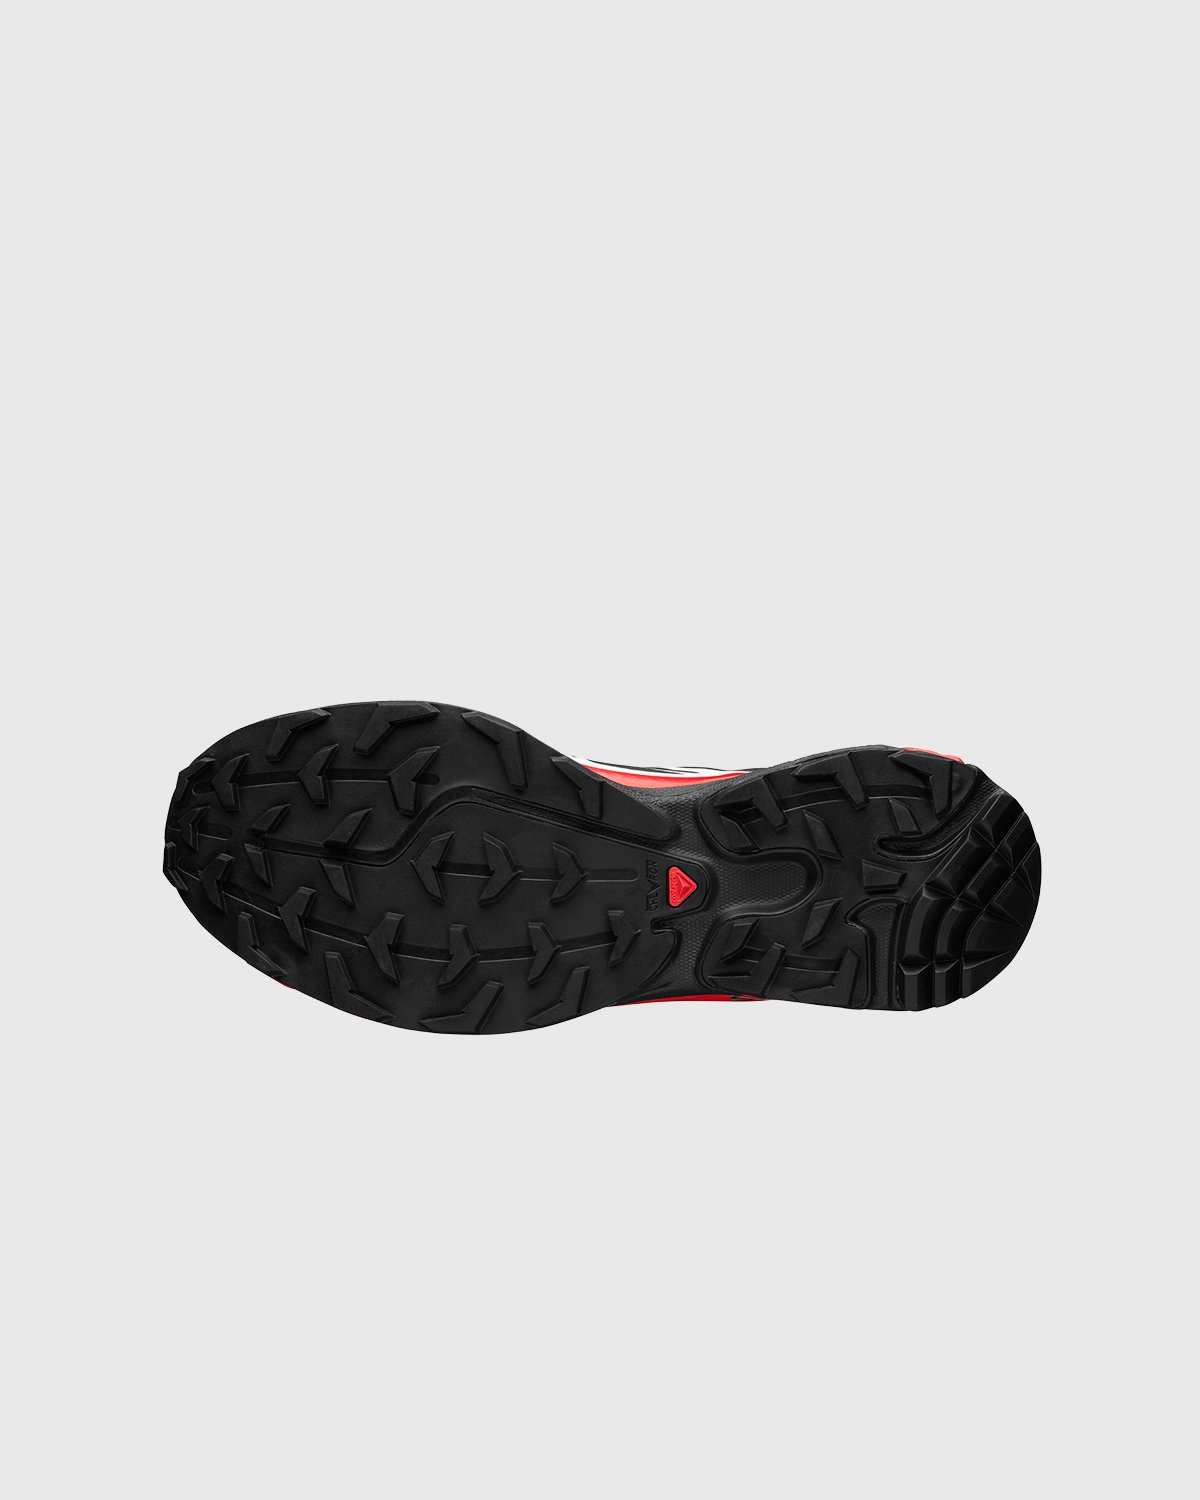 Salomon - XT-6 ADVANCED Black/ Racing Red/ White - Footwear - Black - Image 5